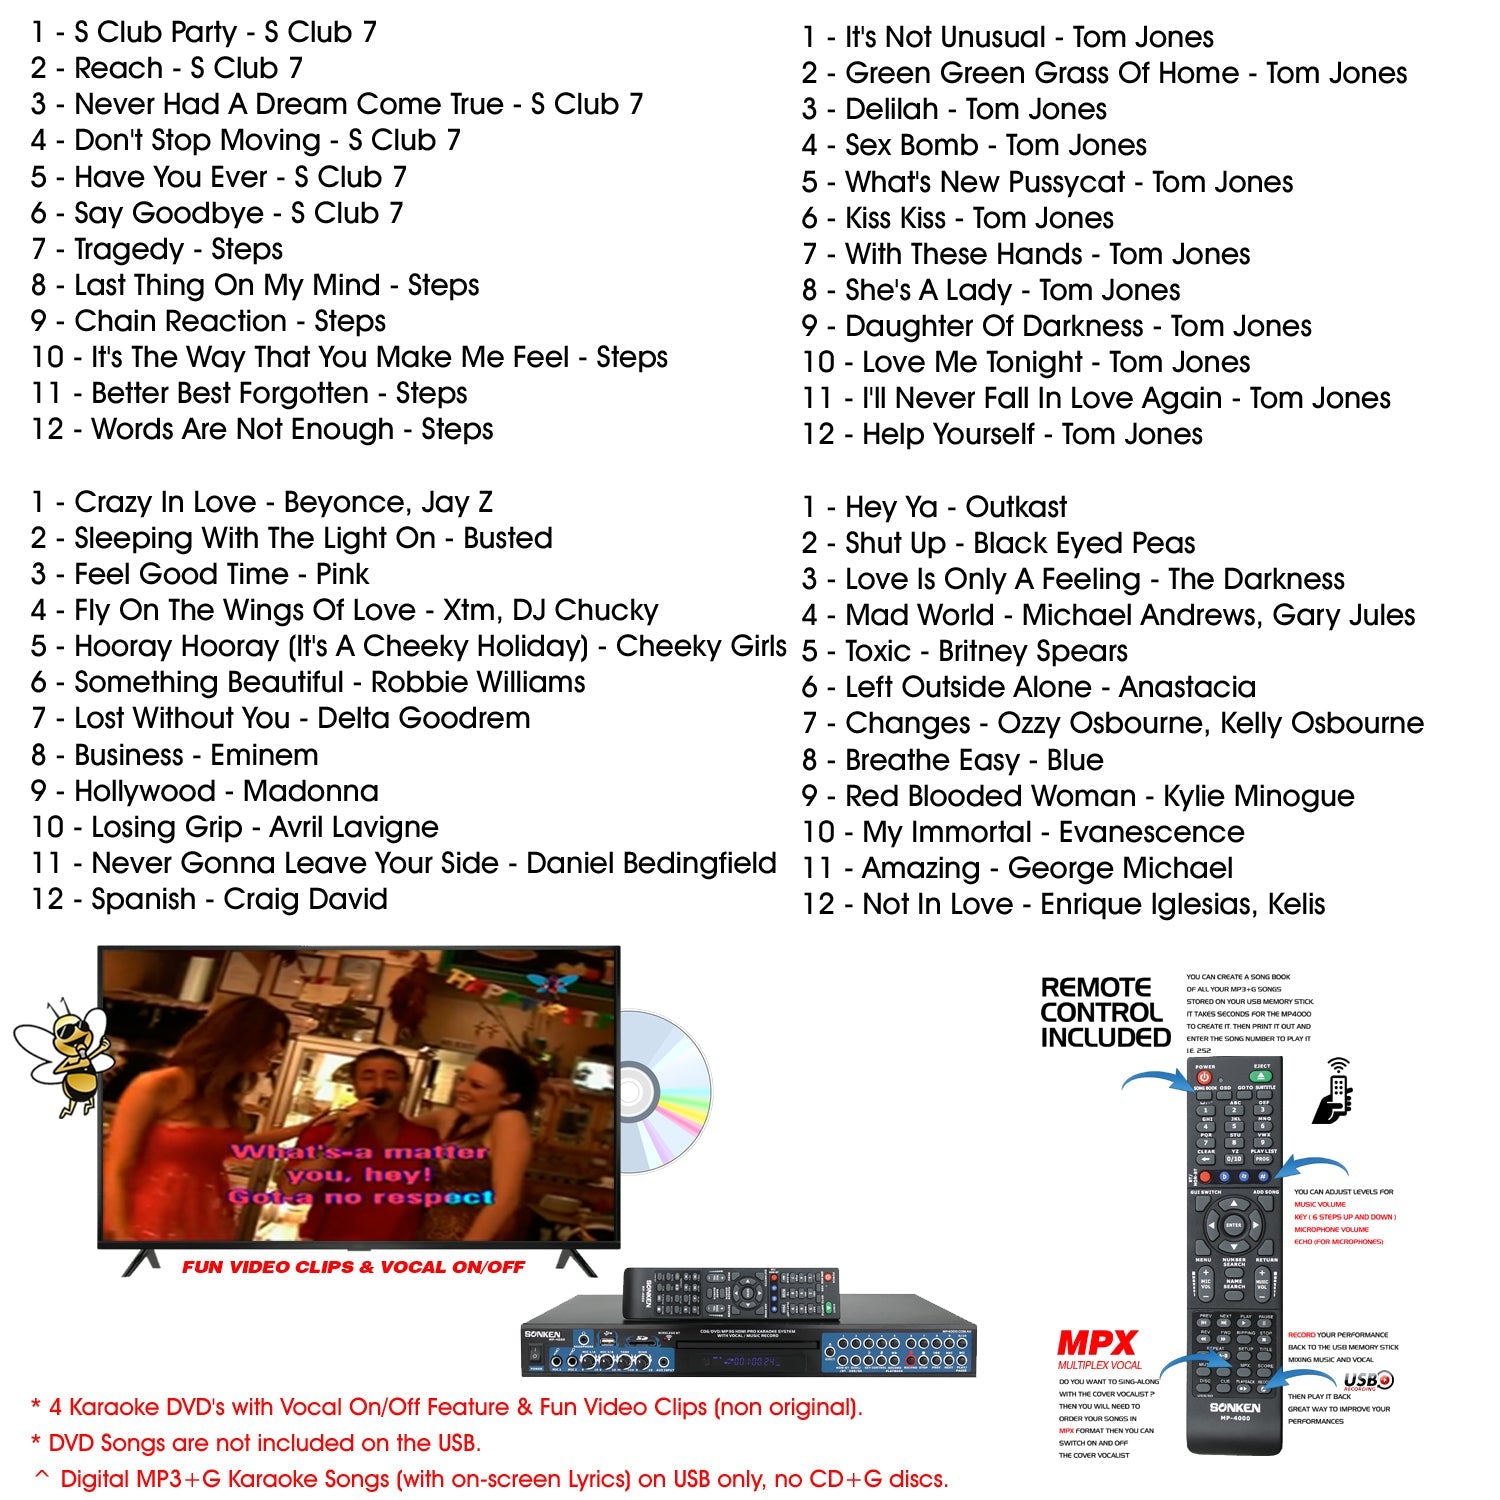 Sonken MP4000 Pro Karaoke Machine + 233 Songs + 2 Wired Microphones - Karaoke Home Entertainment